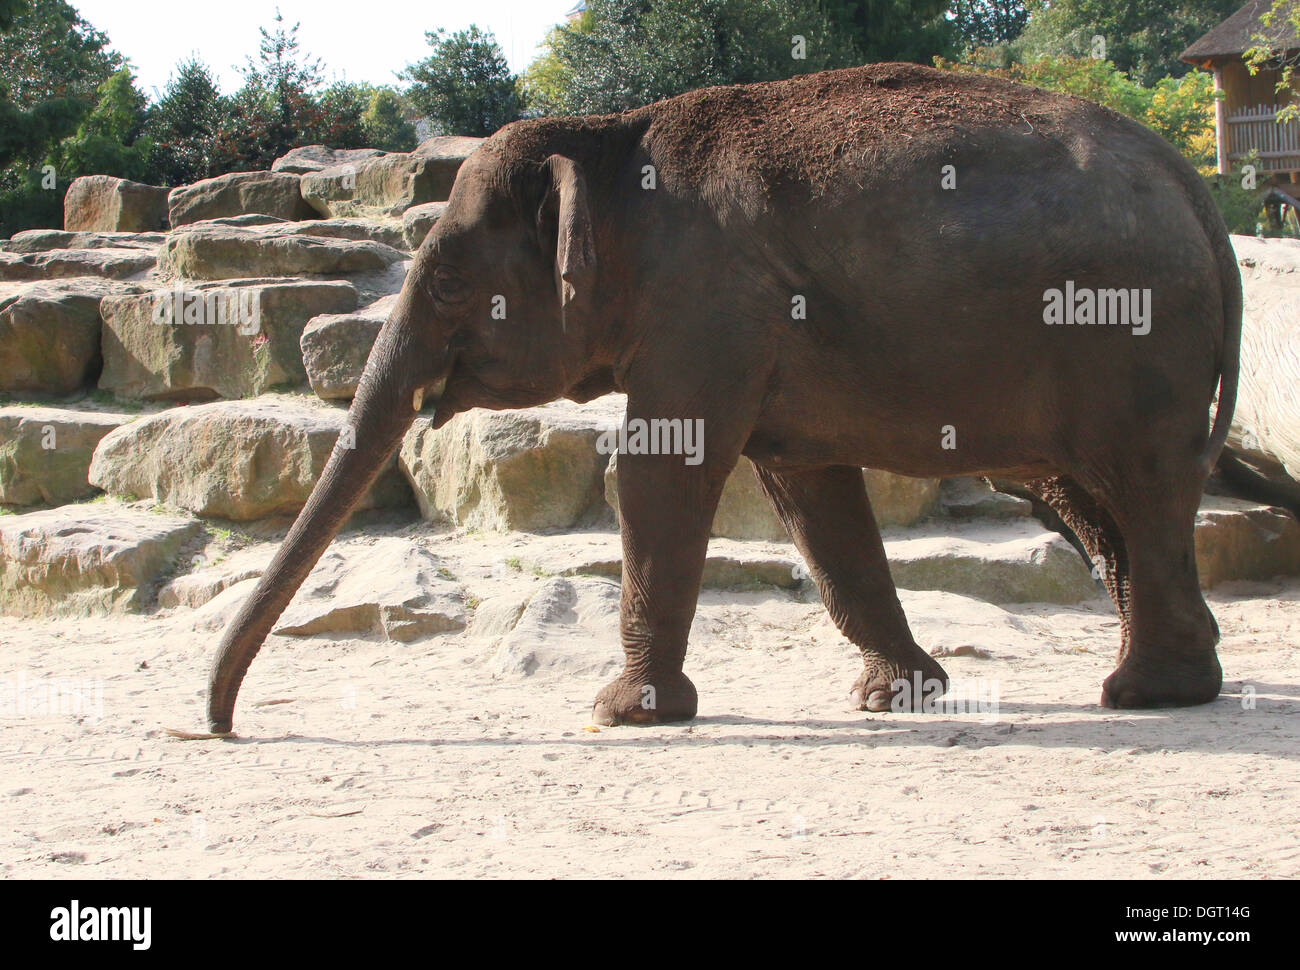 Asian elephant (Elephas maximus) Stock Photo